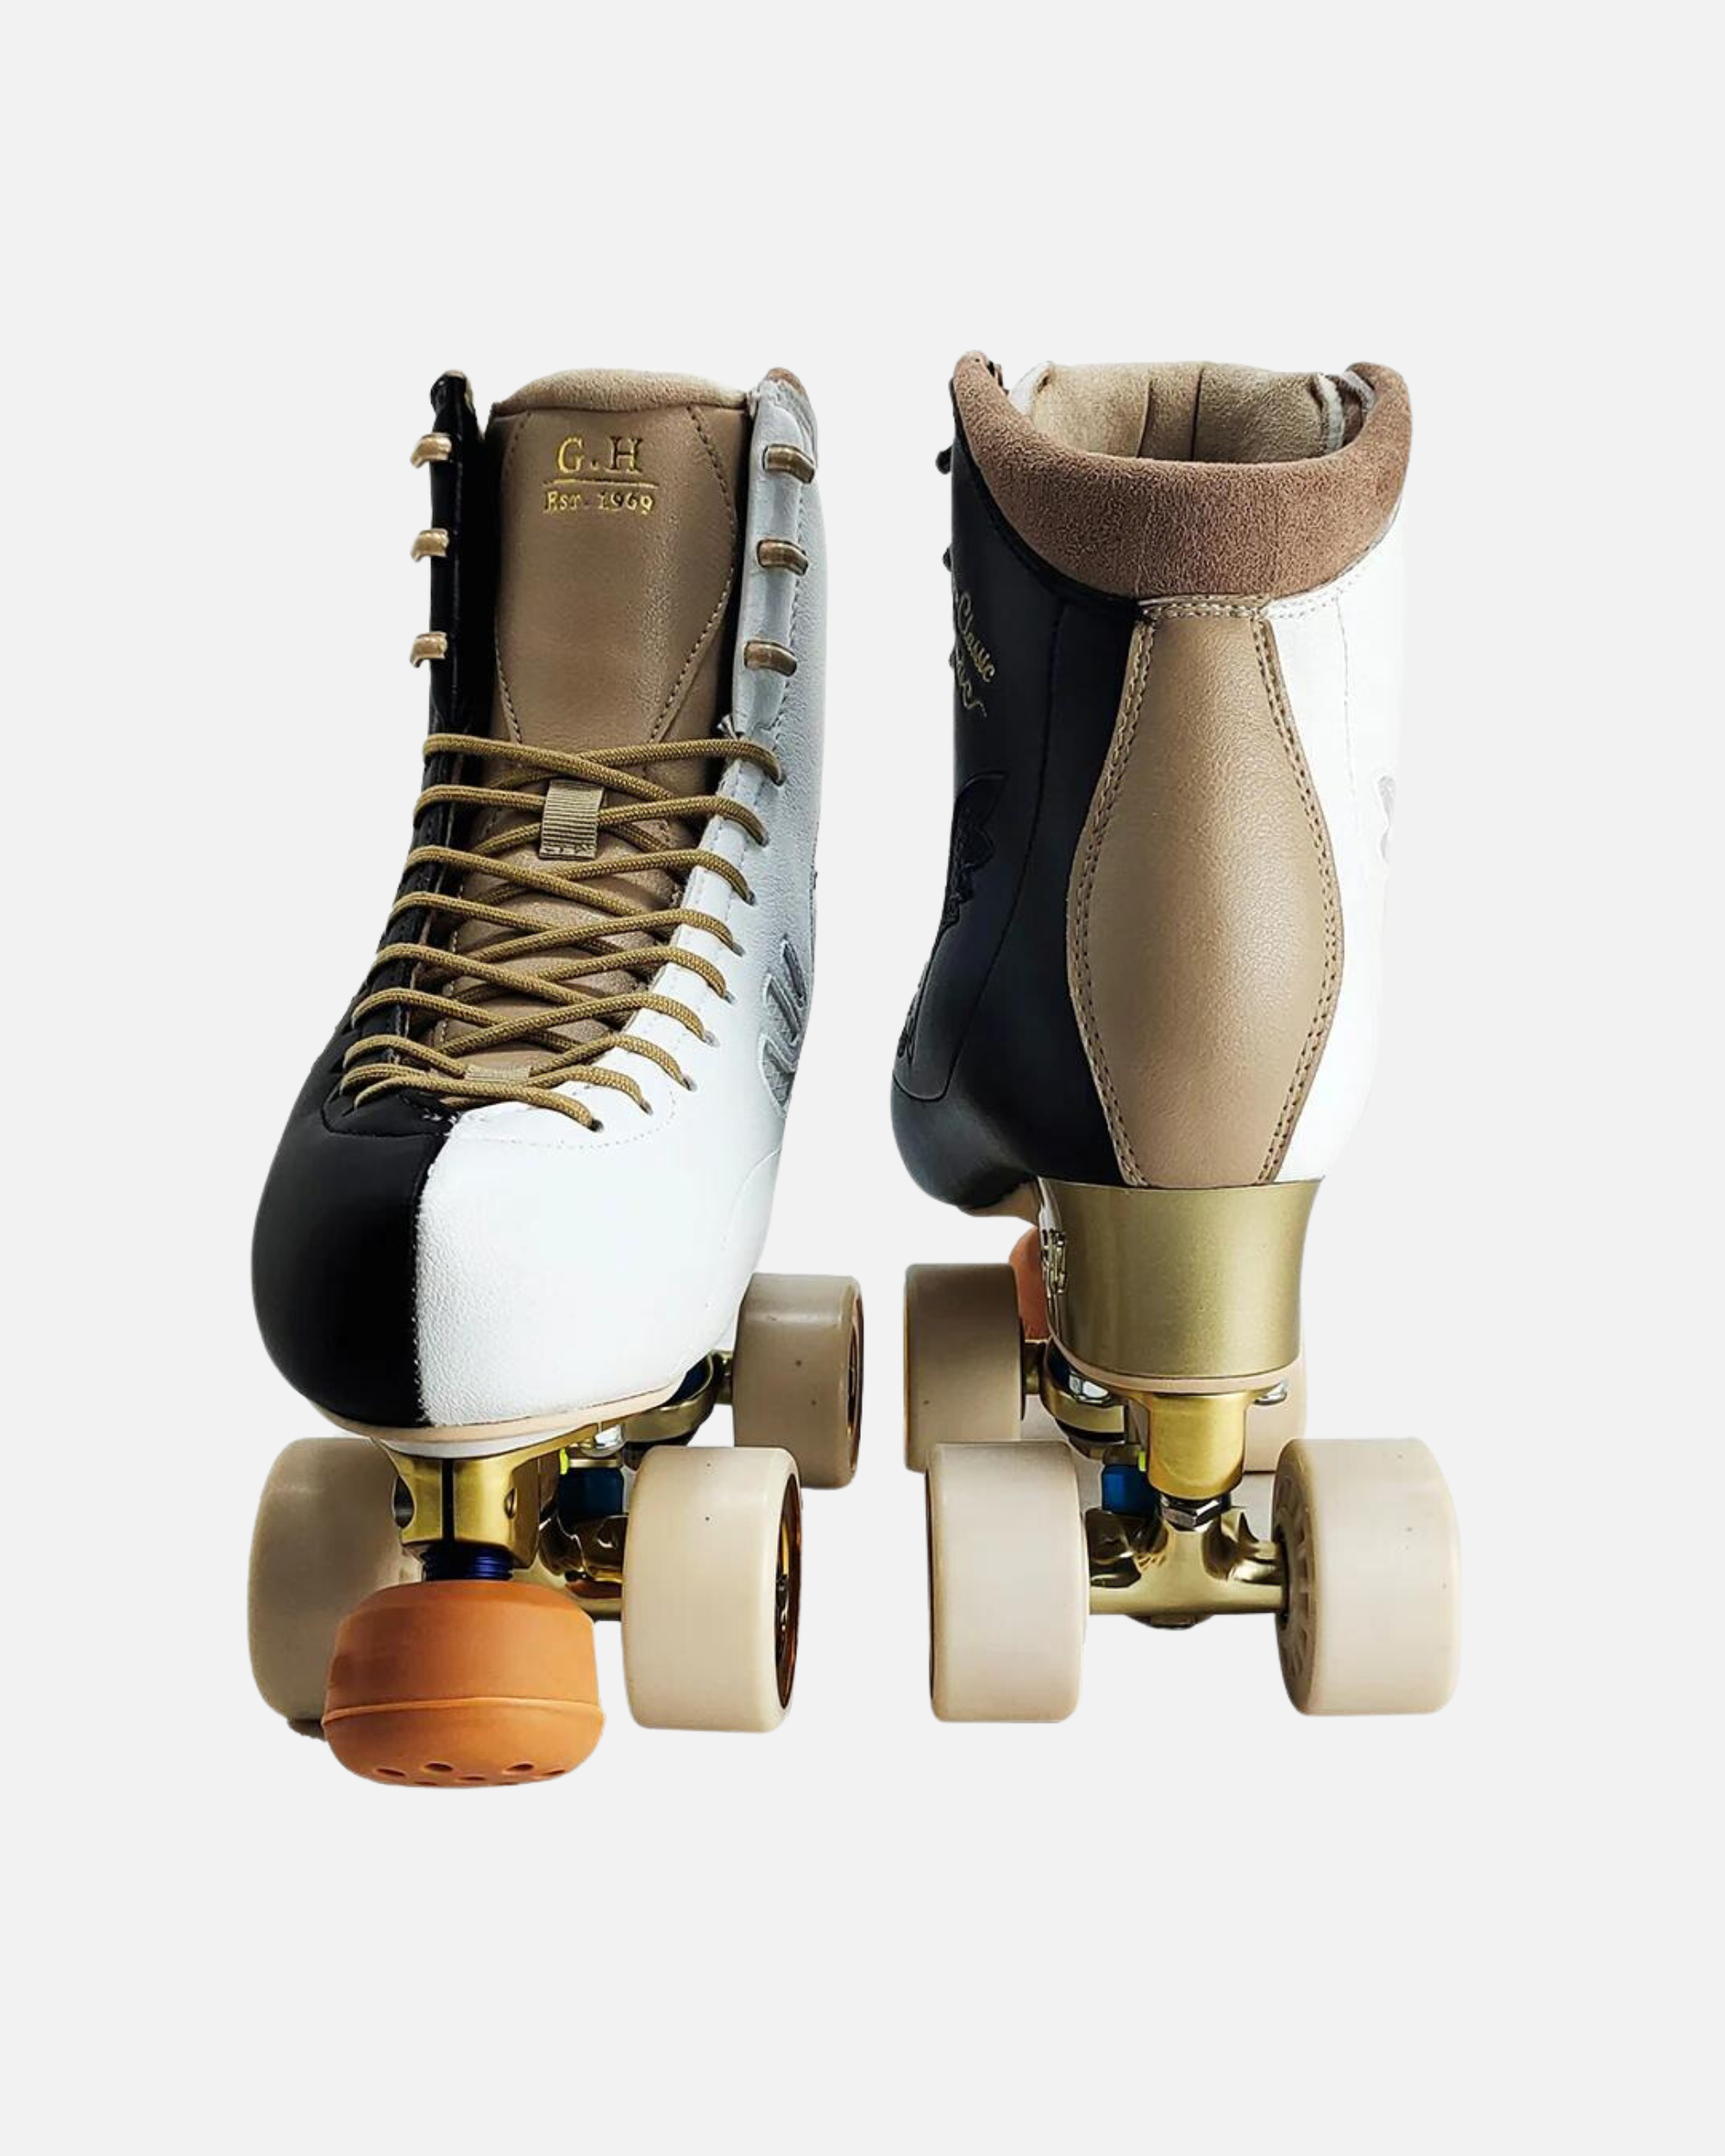 Dance classic diamond quad roller skates  (flexible boots SR28) (Vanguard or Jaboco frame) Color Jam